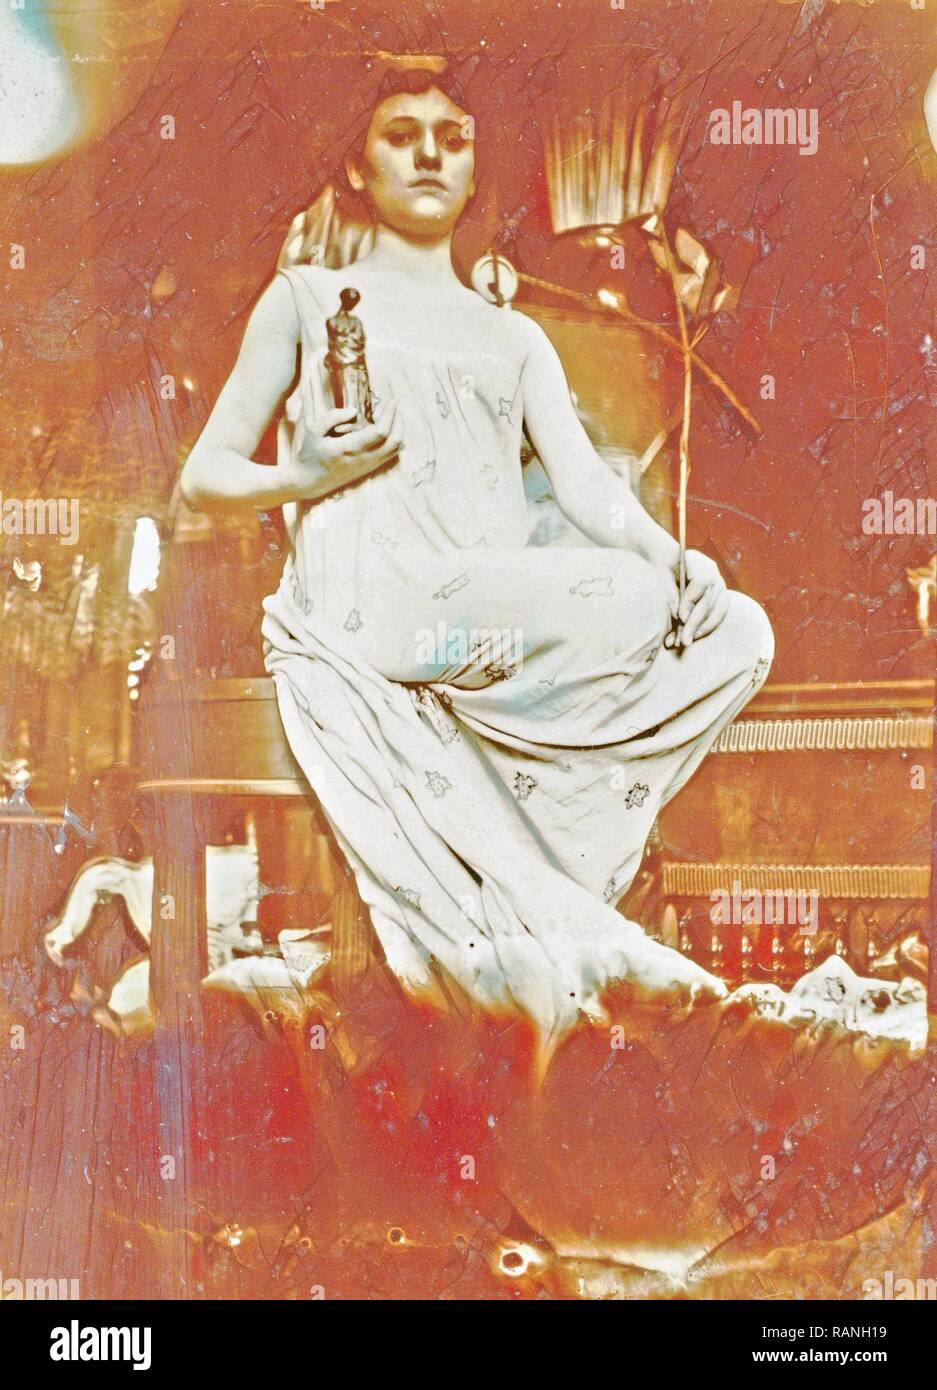 Donna figurina, Alfons Maria Mucha, Alphonse Mucha, ceco di Art Nouveau 1895-1905. Reinventato da Gibon. Arte Classica reinventato Foto Stock